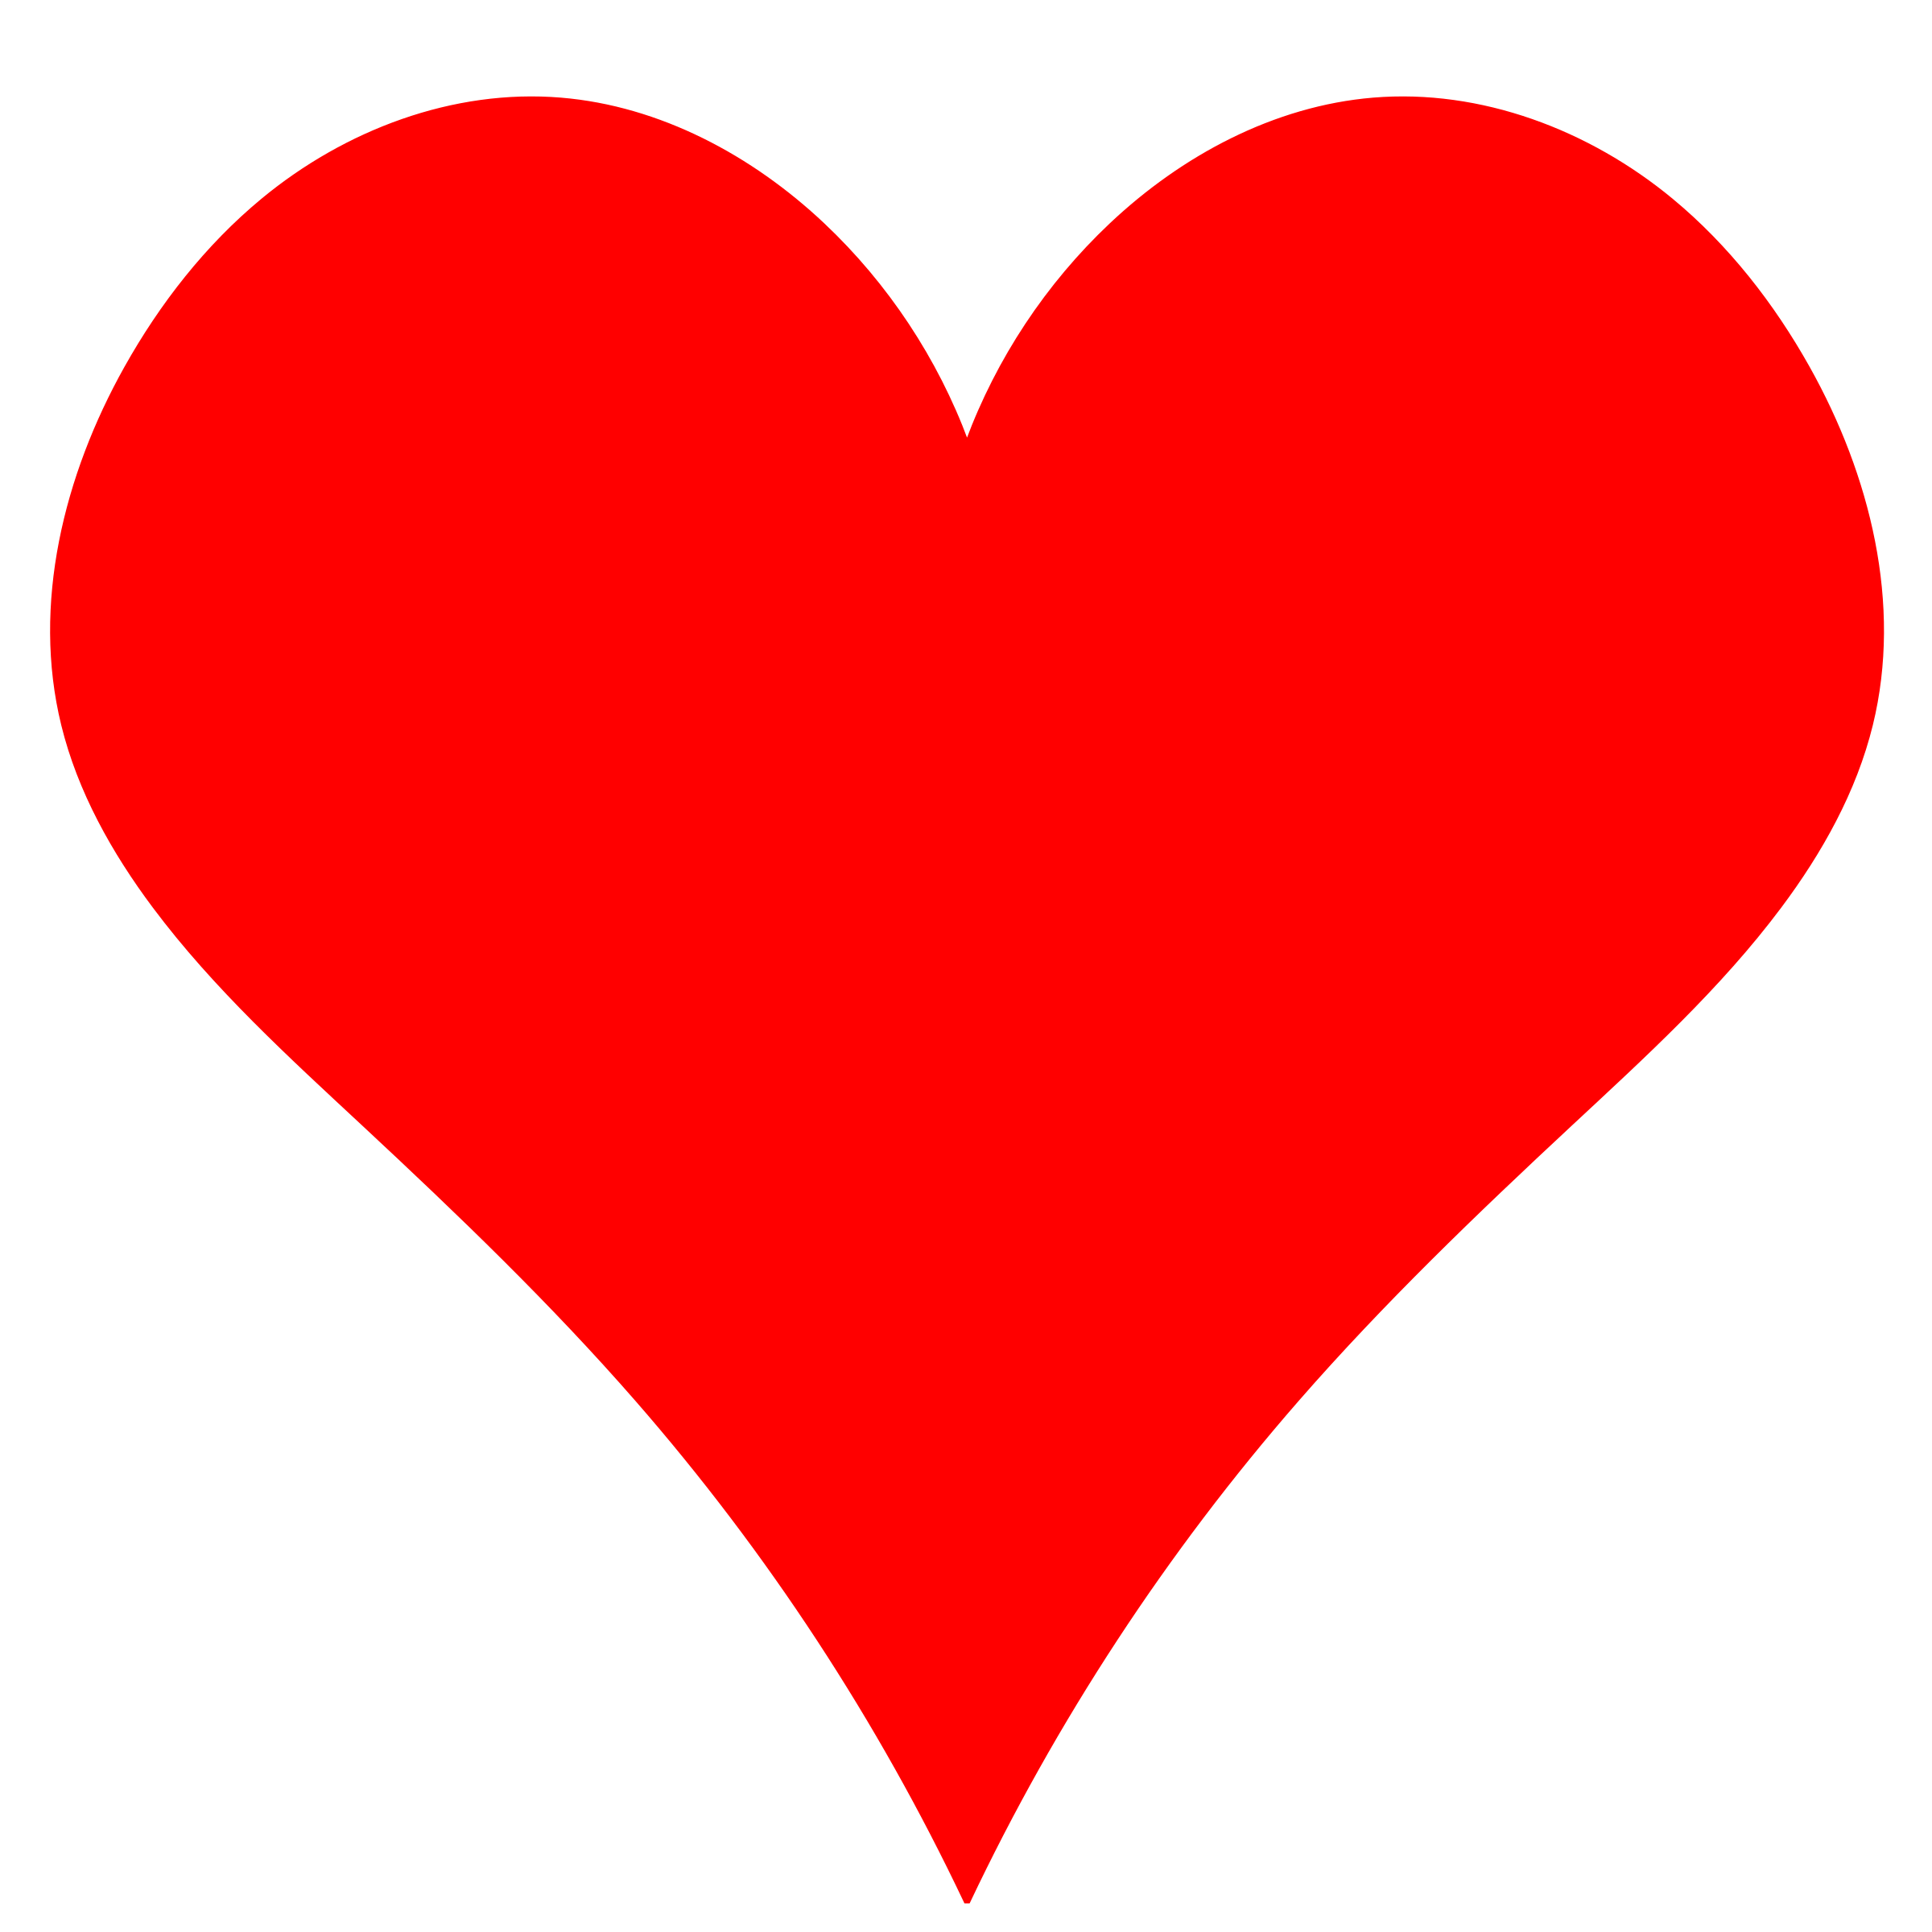 Plain Red Heart Shape By Gr8d - Heart Shape Clip Art